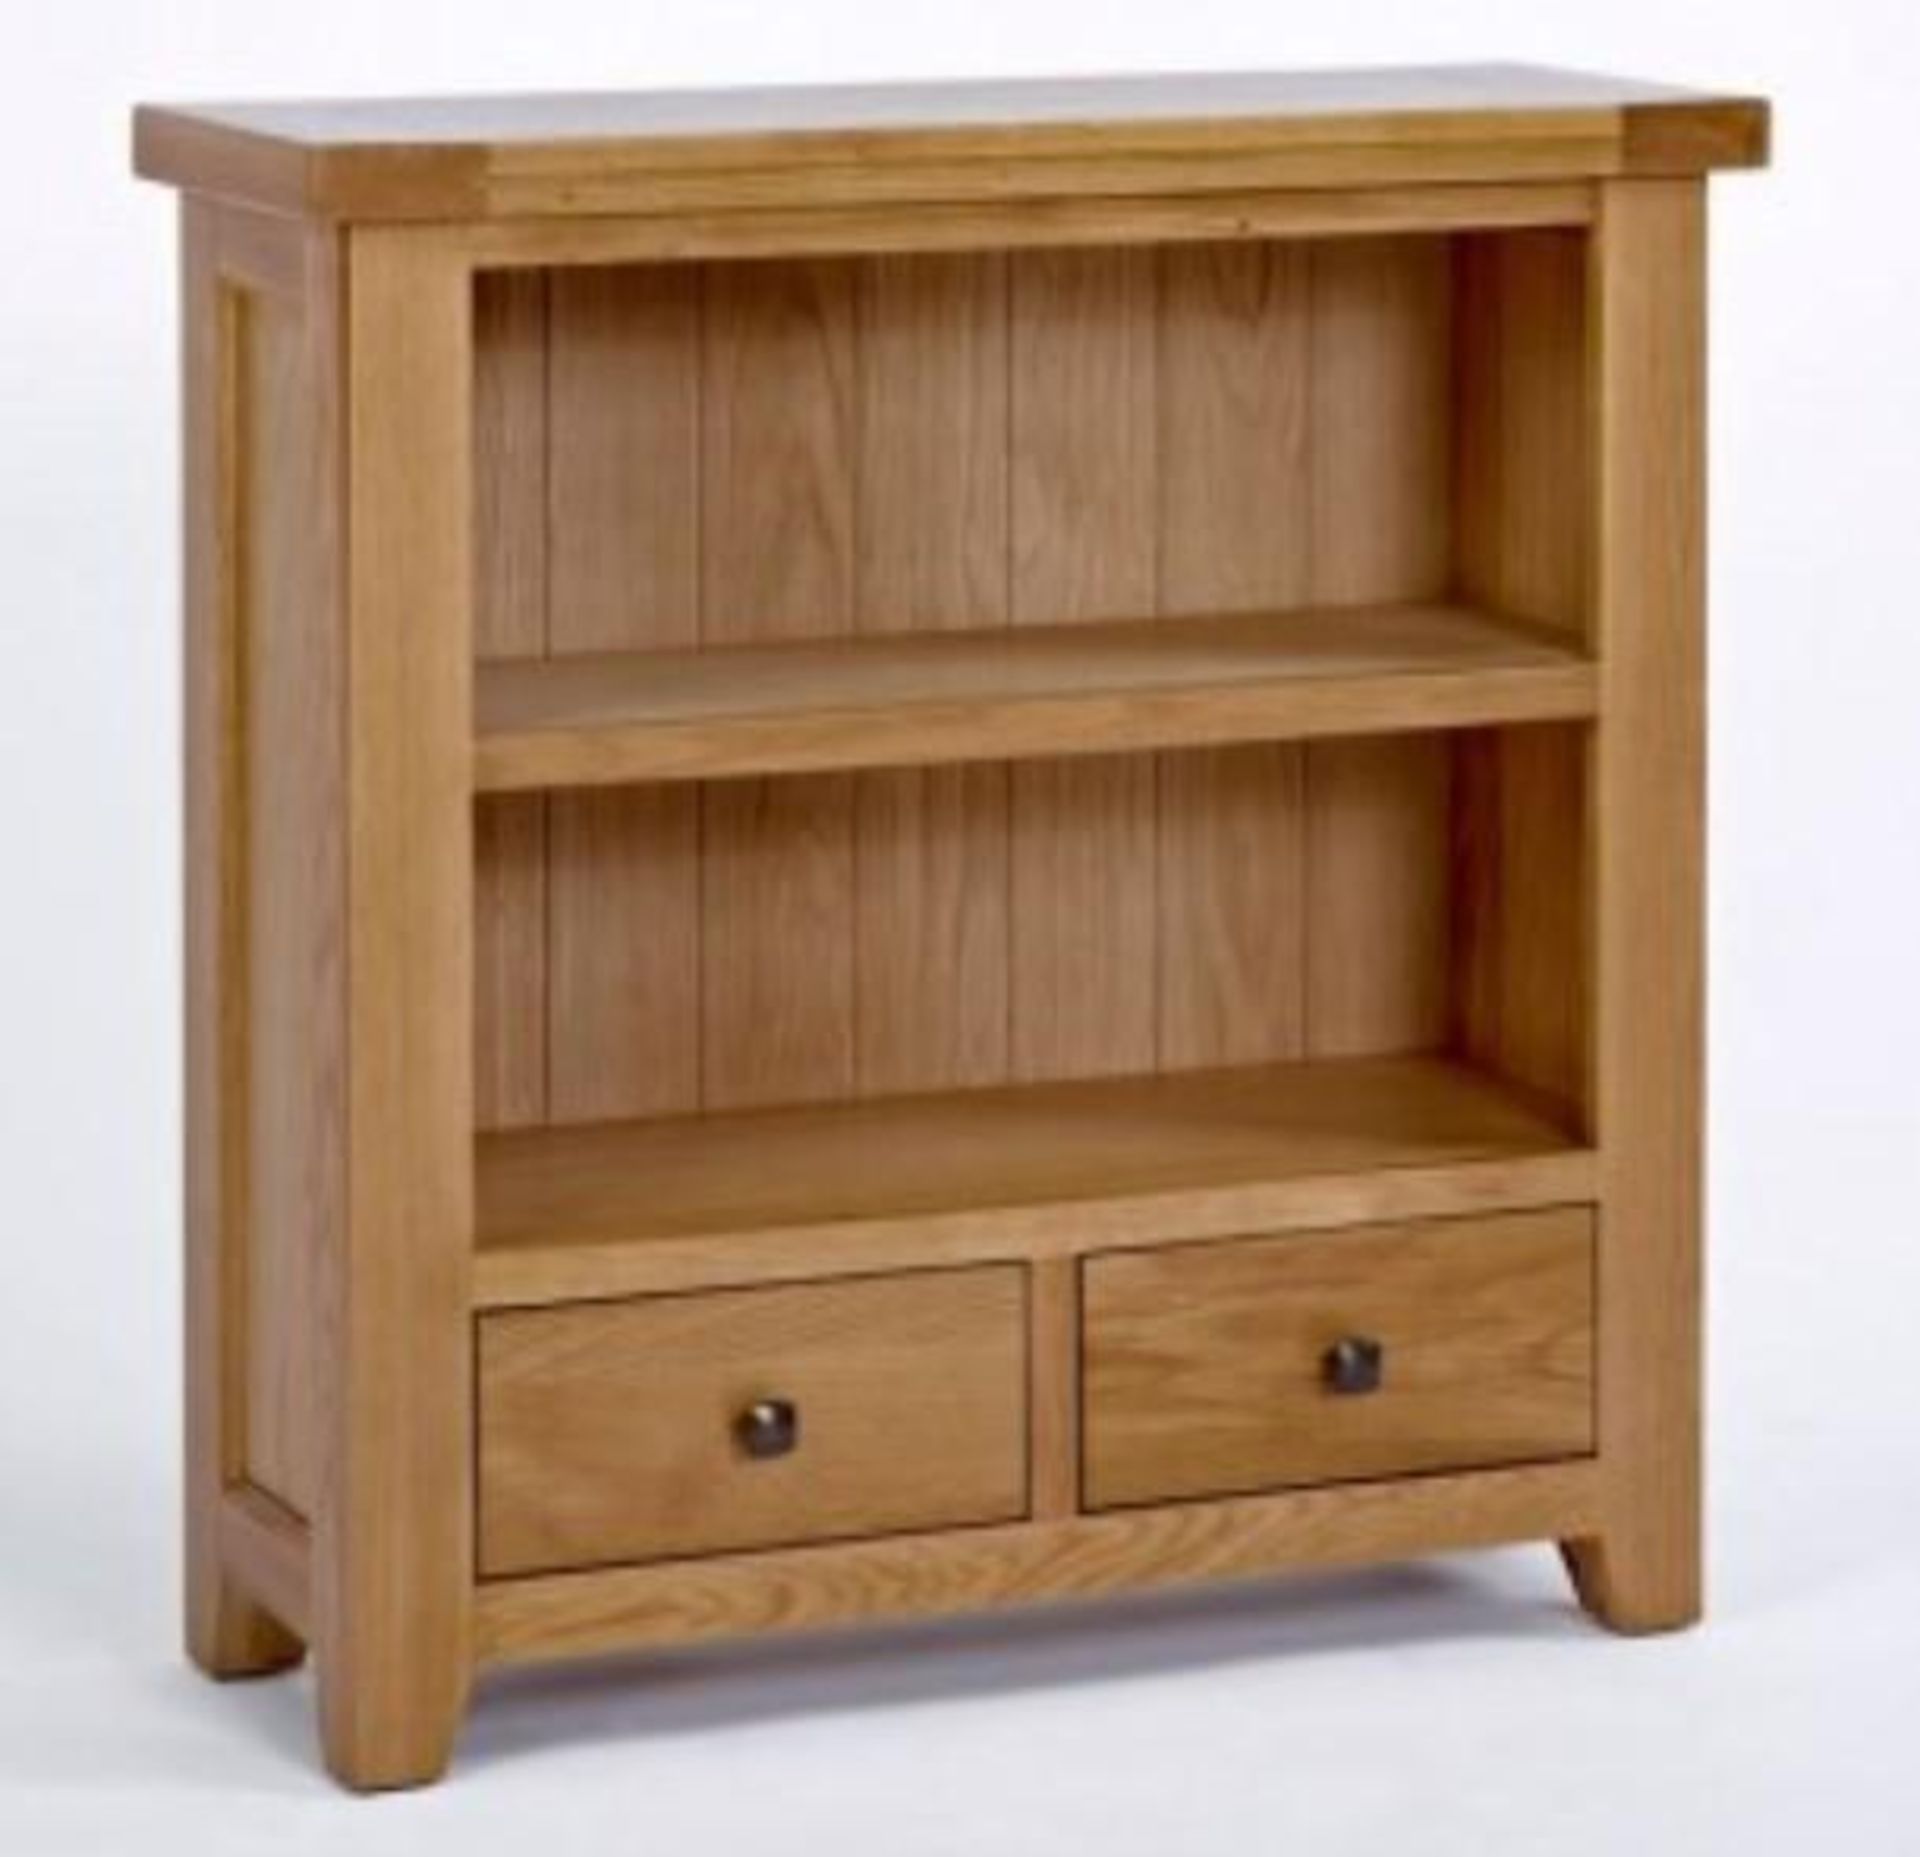 BRAND NEW & BOXED Devon oak low bookcase 2 drawer